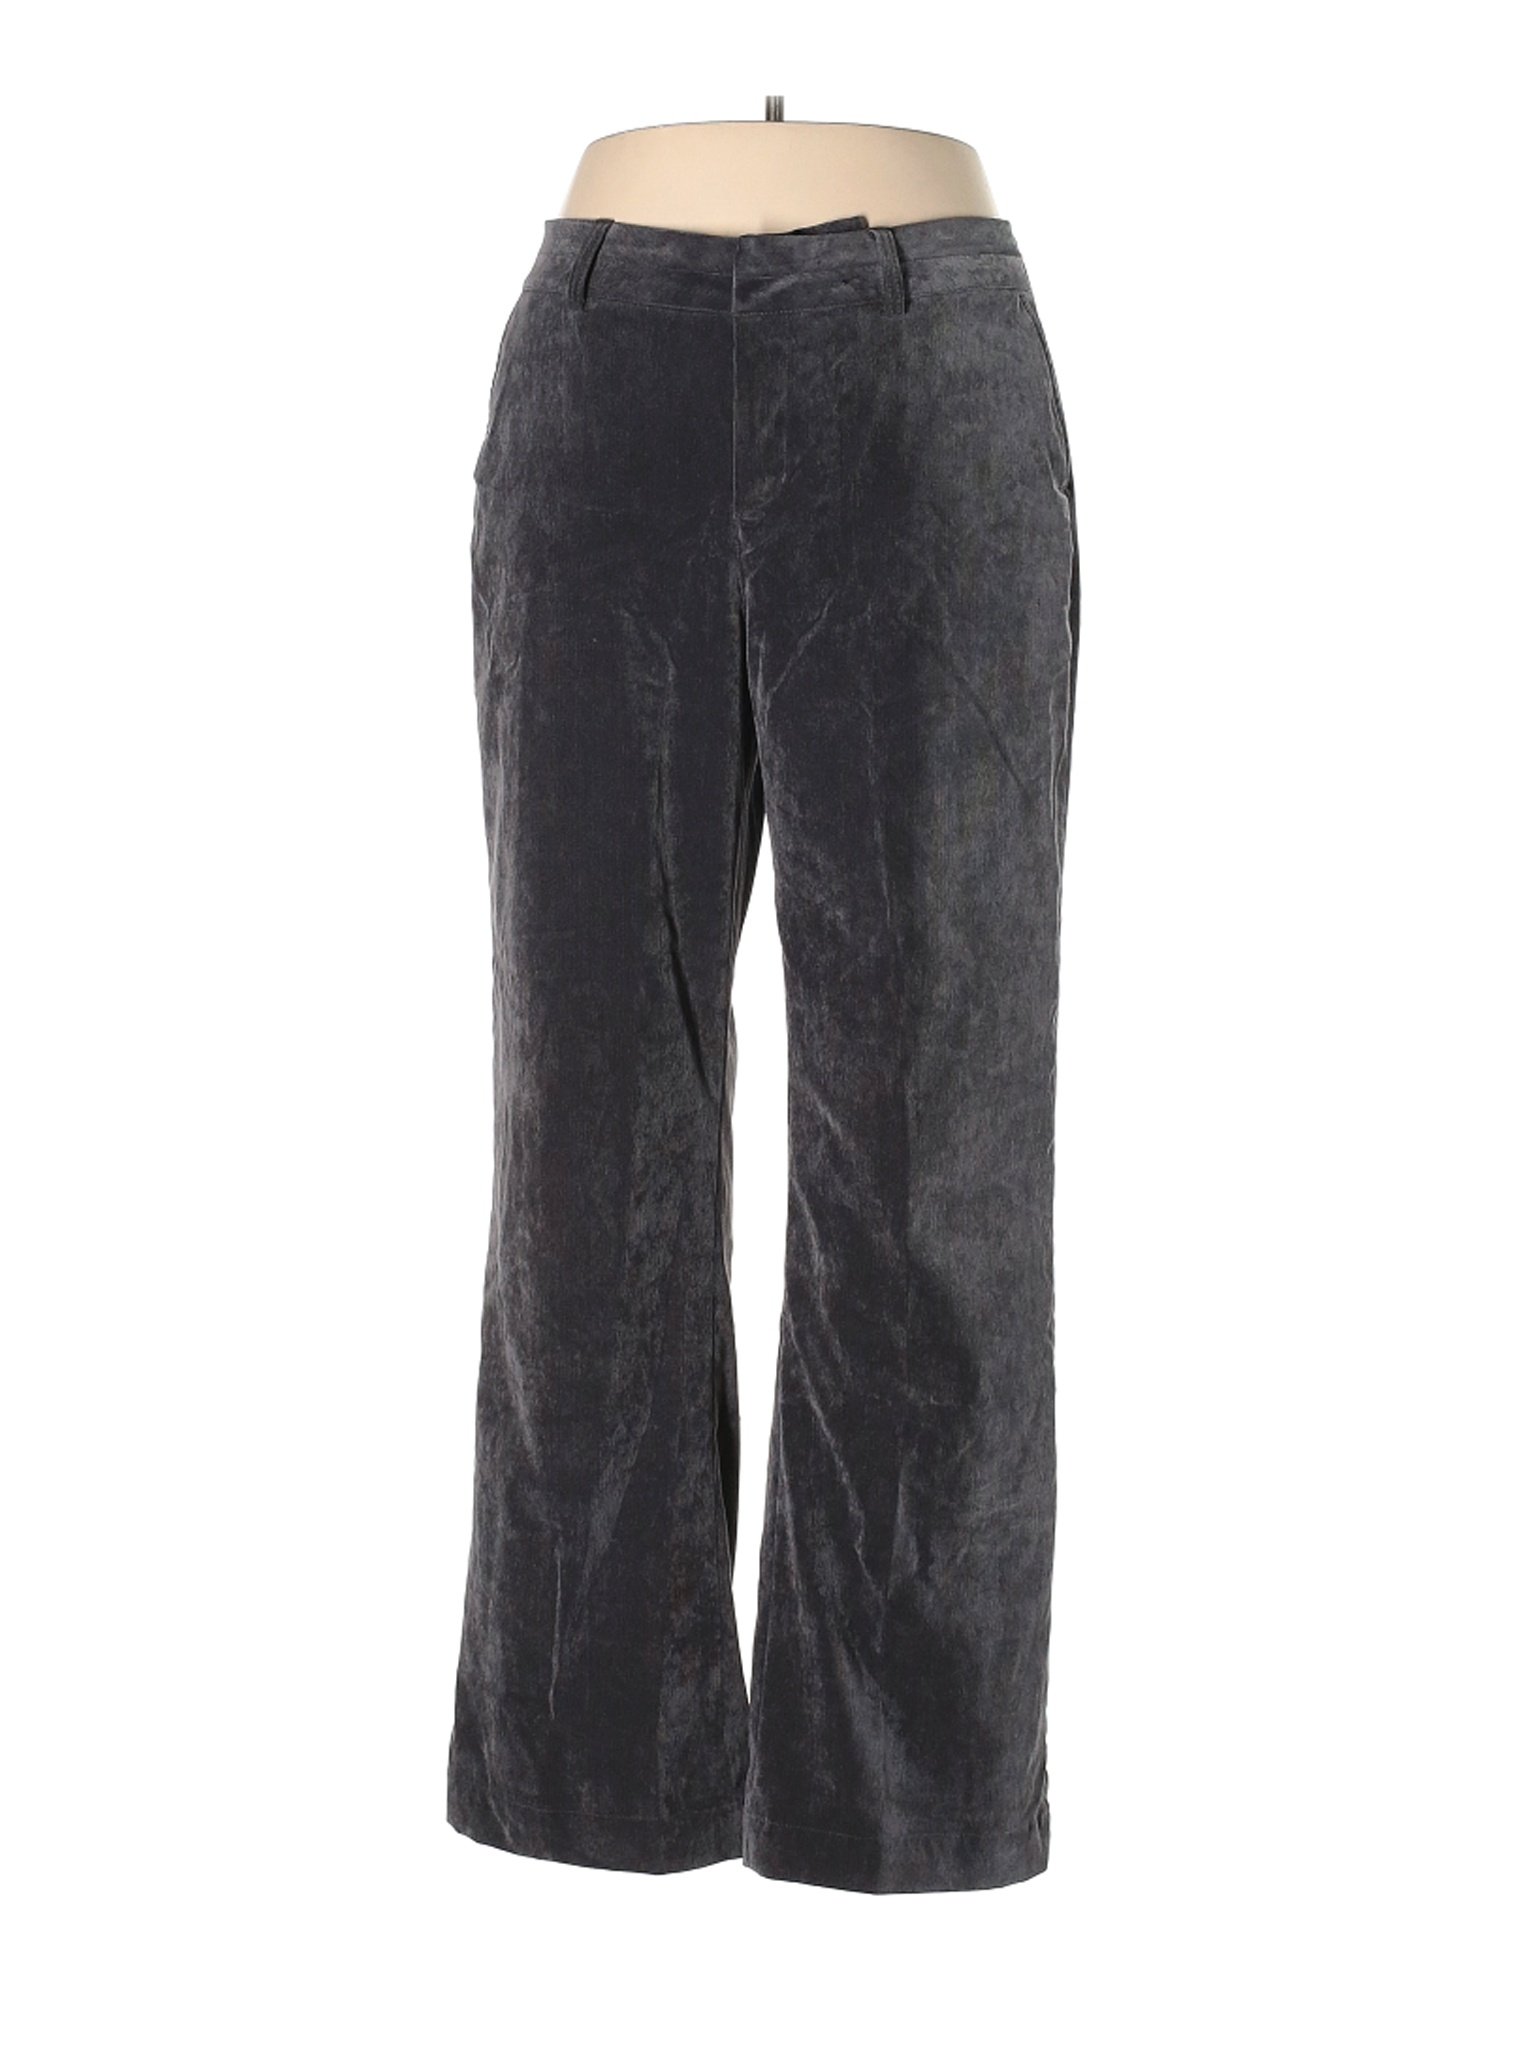 Coldwater Creek Women Silver Casual Pants 14 | eBay